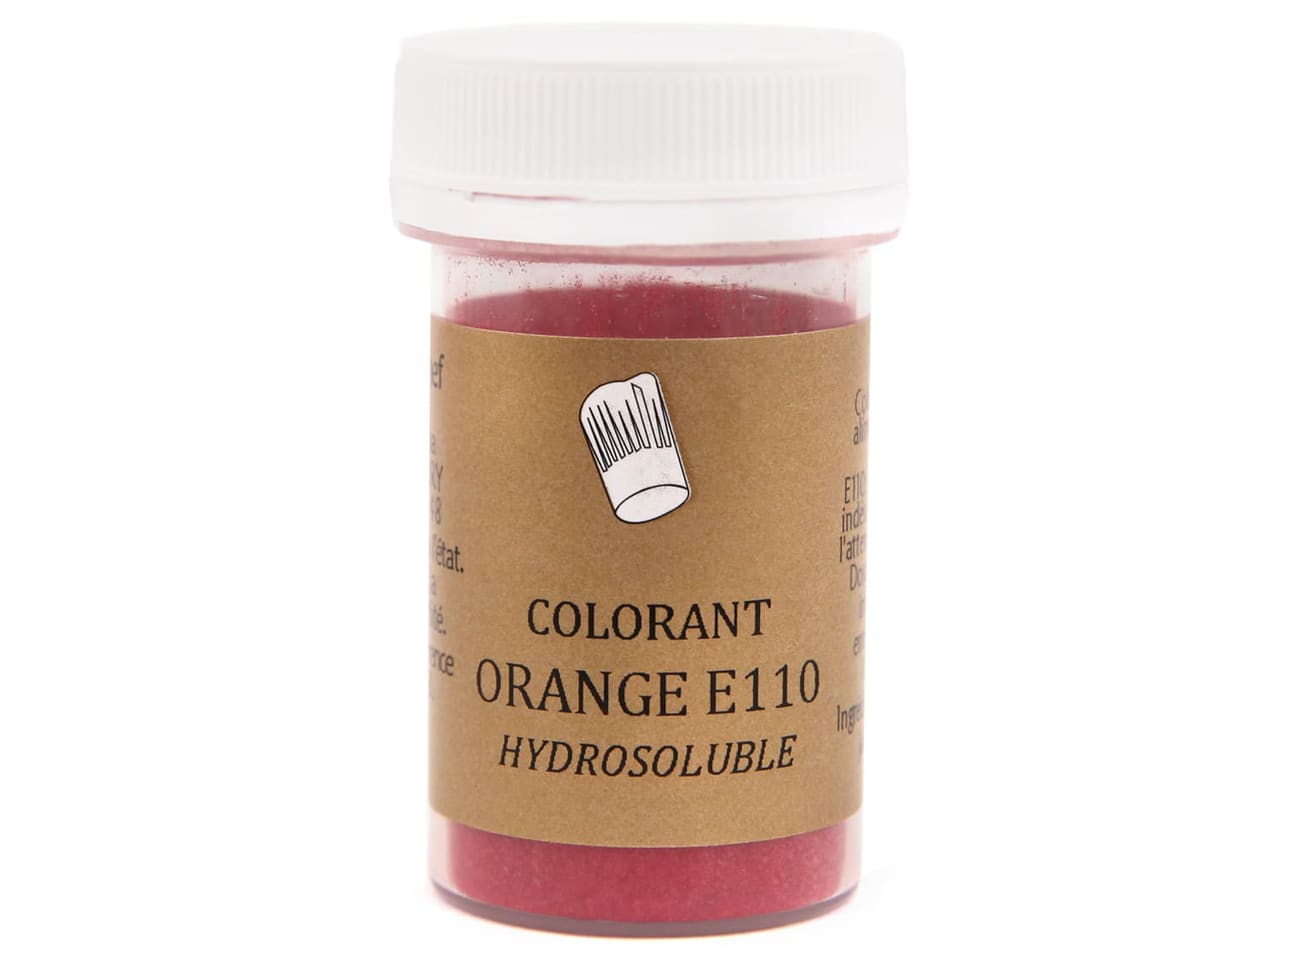 Colorant alimentaire en poudre orange - hydrosoluble - 10 g